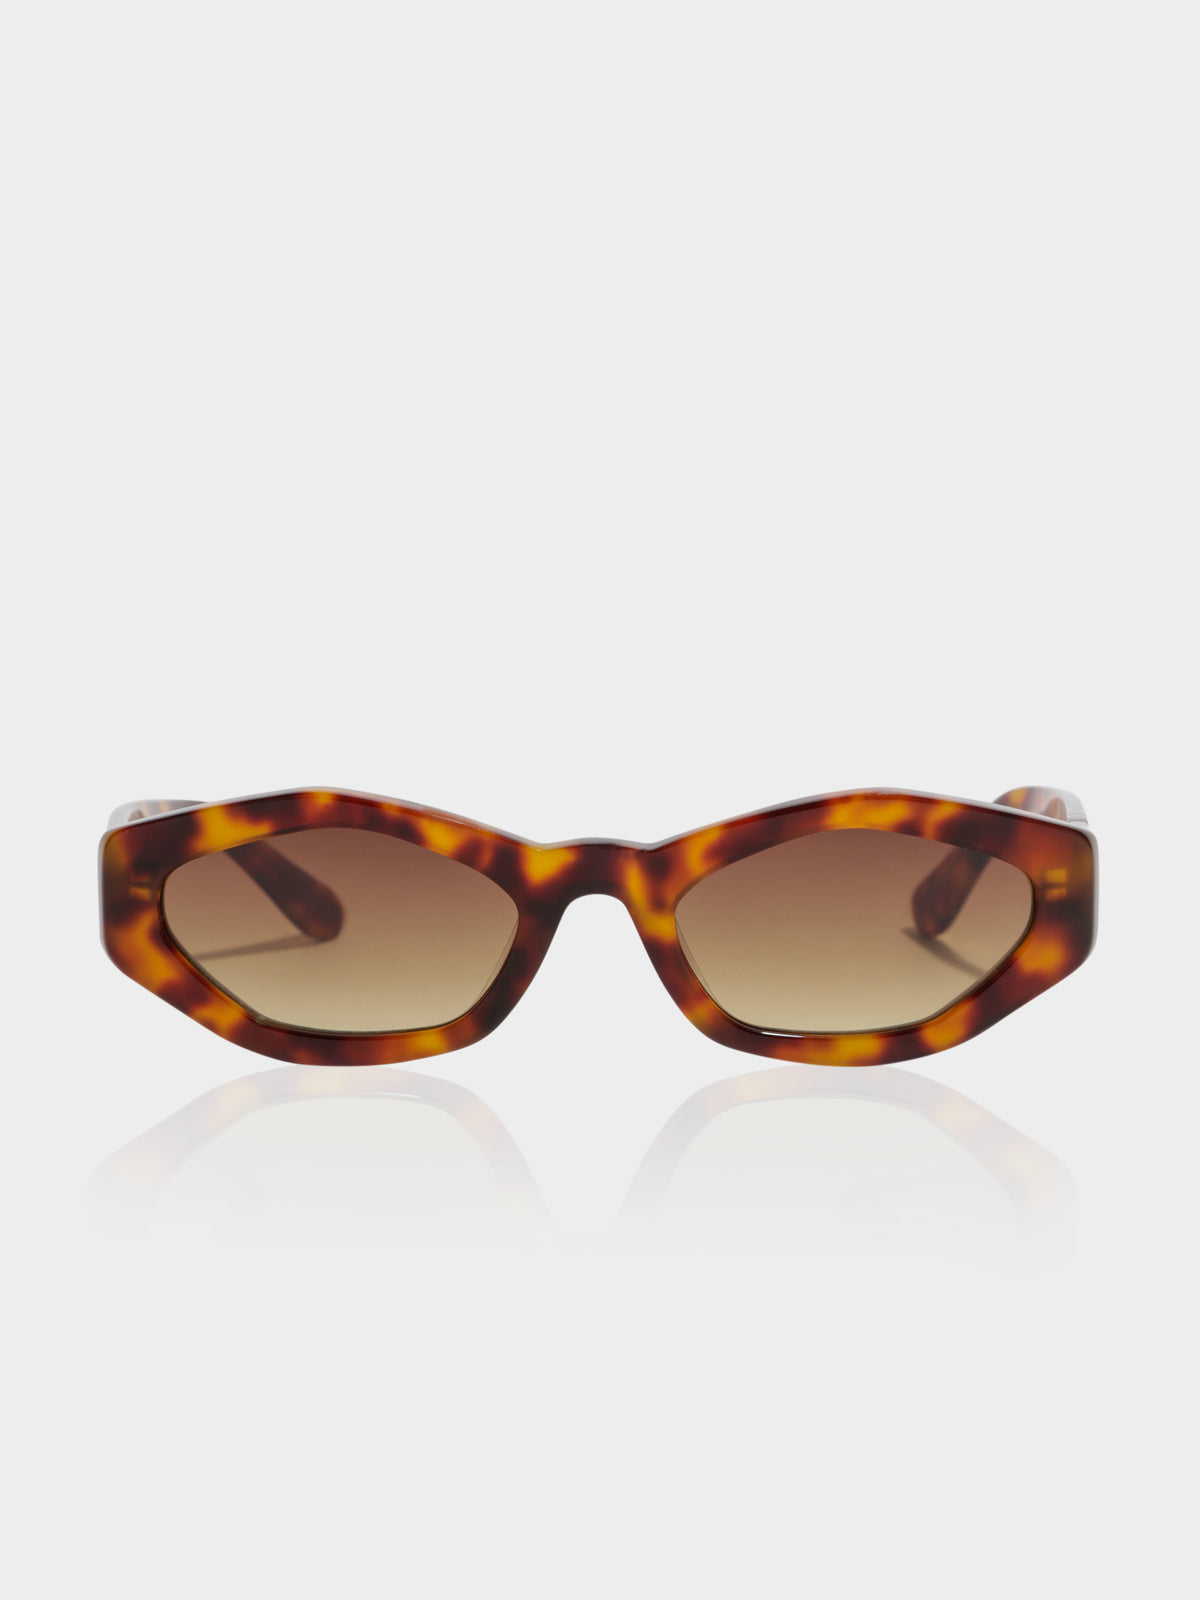 CL7759 Caremilly Tortoise Sunglasses in Brown Tortoiseshell